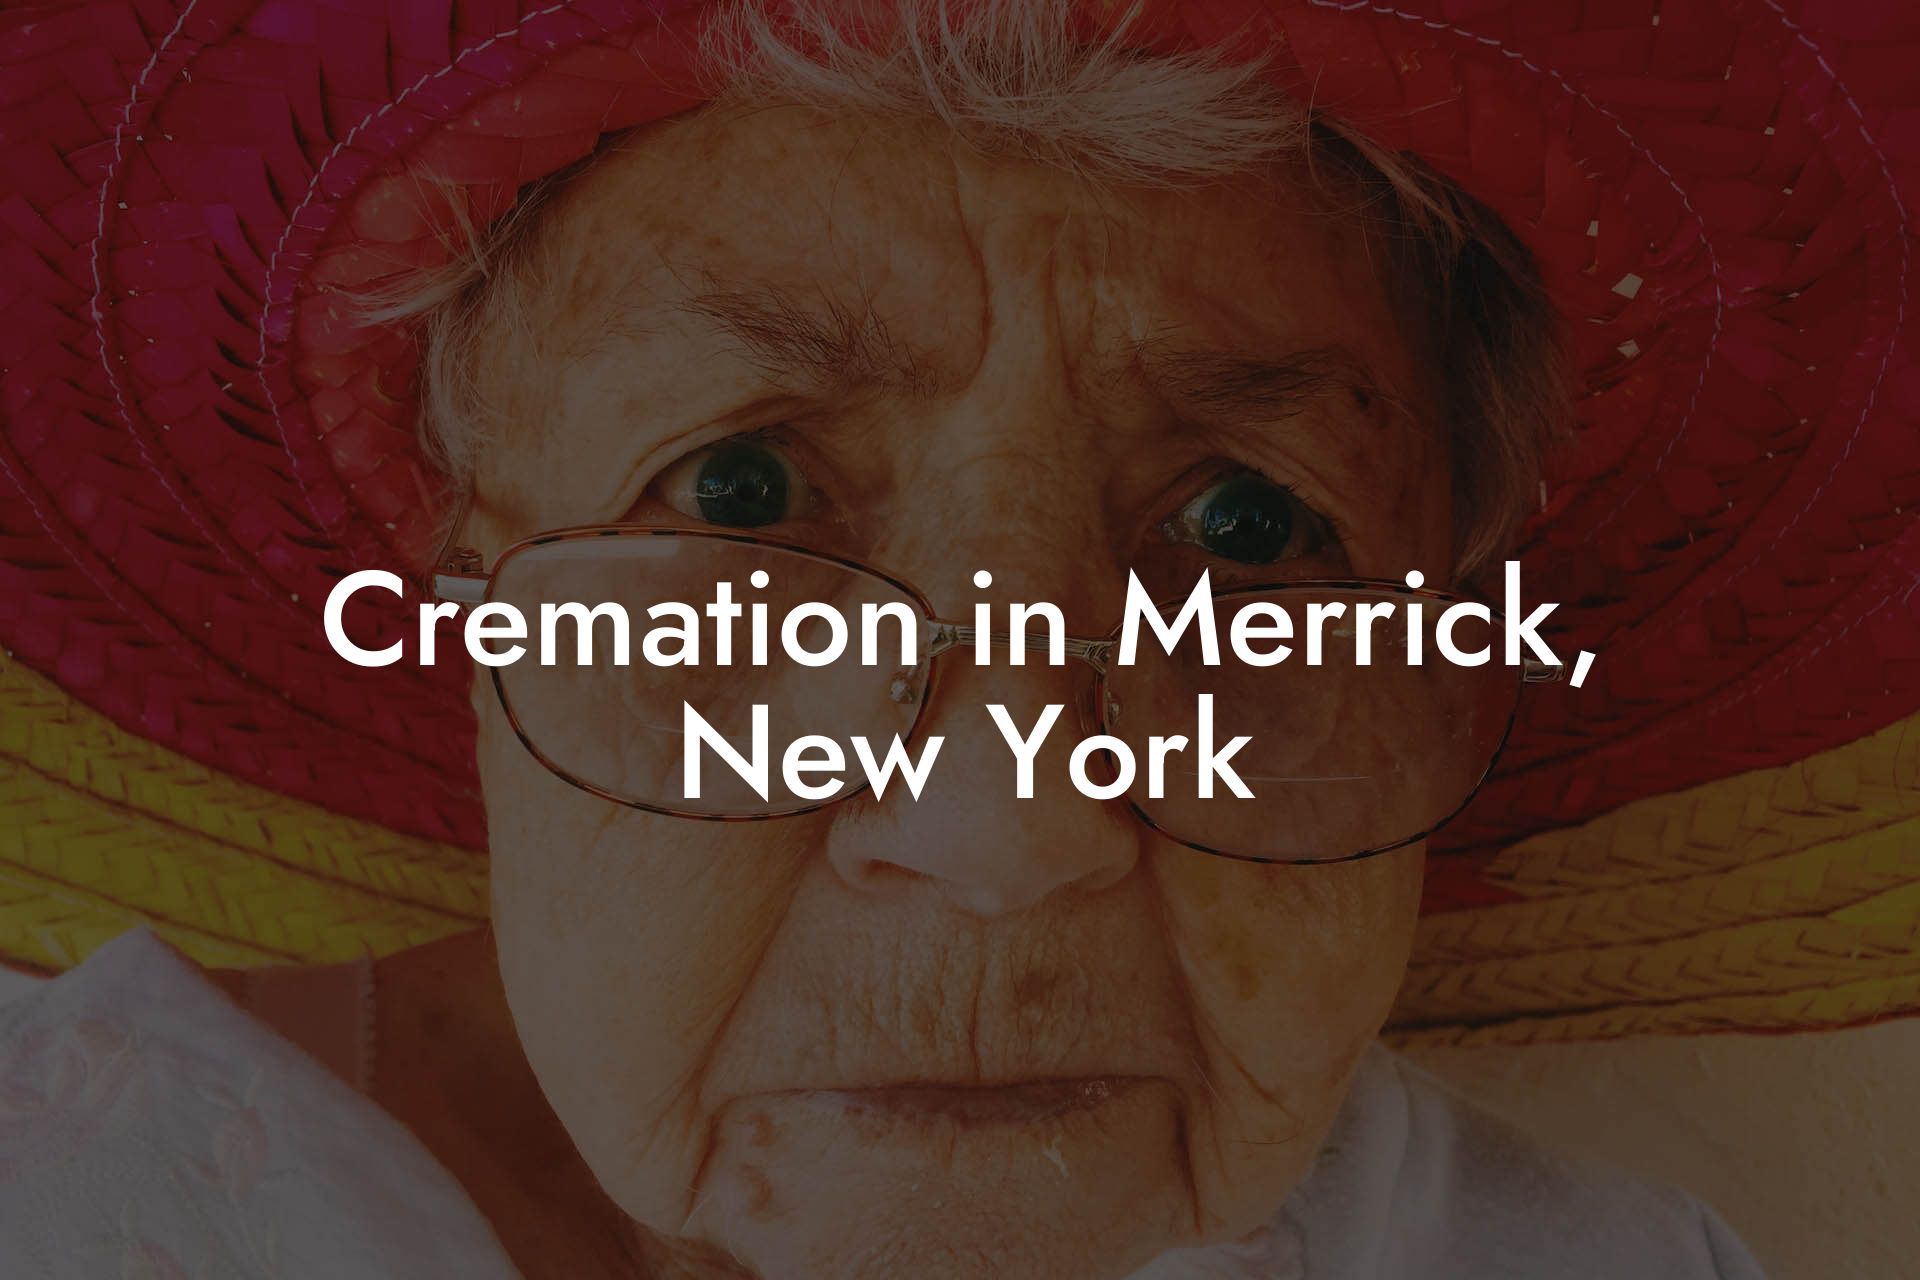 Cremation in Merrick, New York